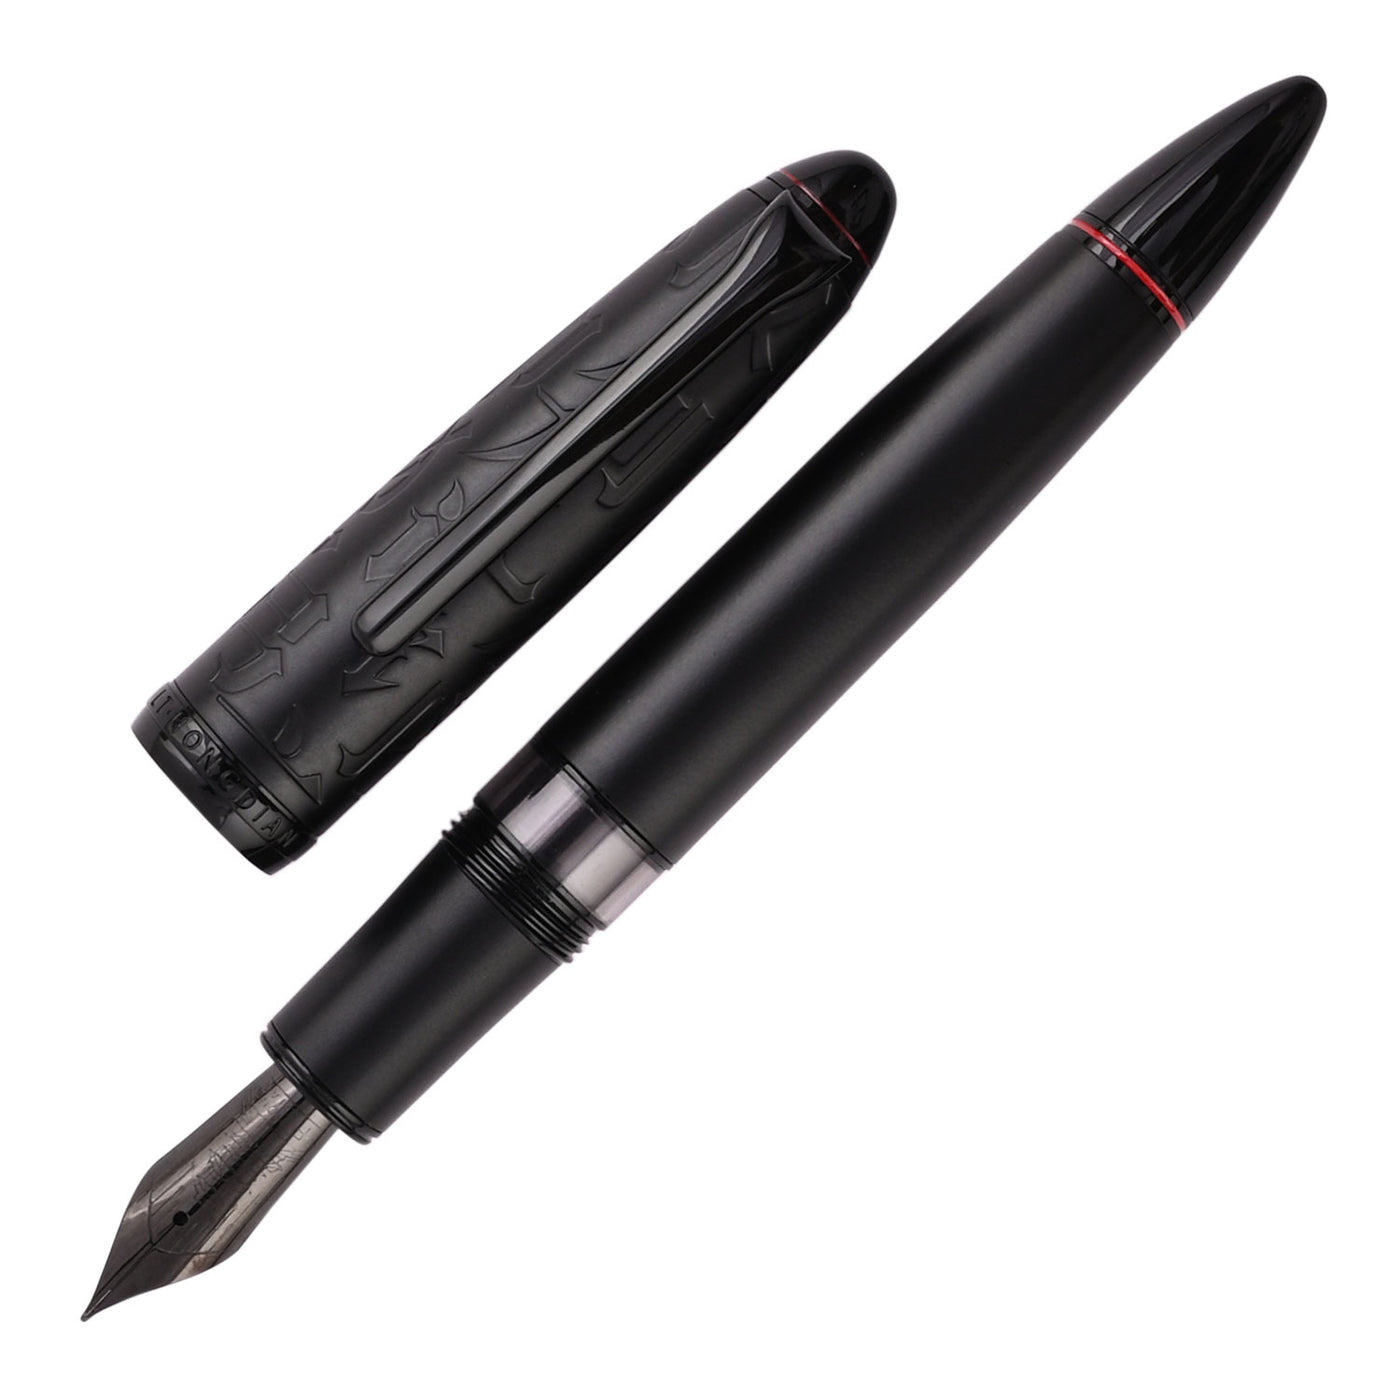 Hongdian N6 Fountain Pen - Black